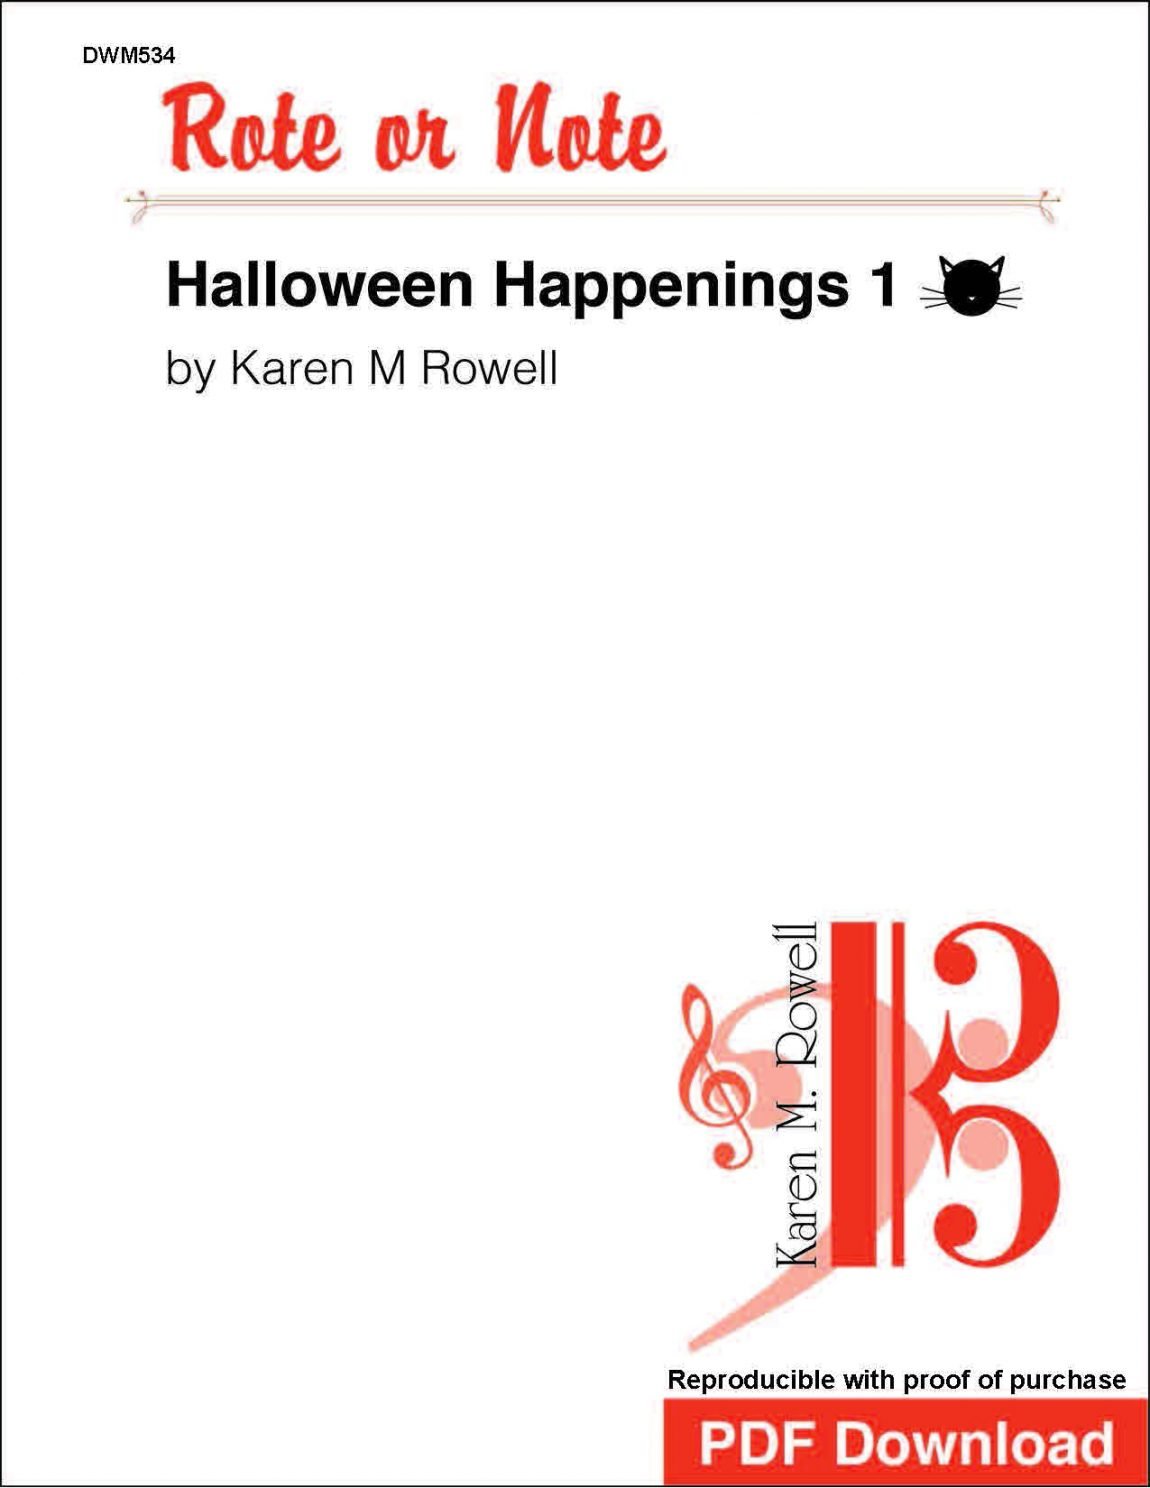 Rote or Note: Halloween Happenings 1 (PDF Download)